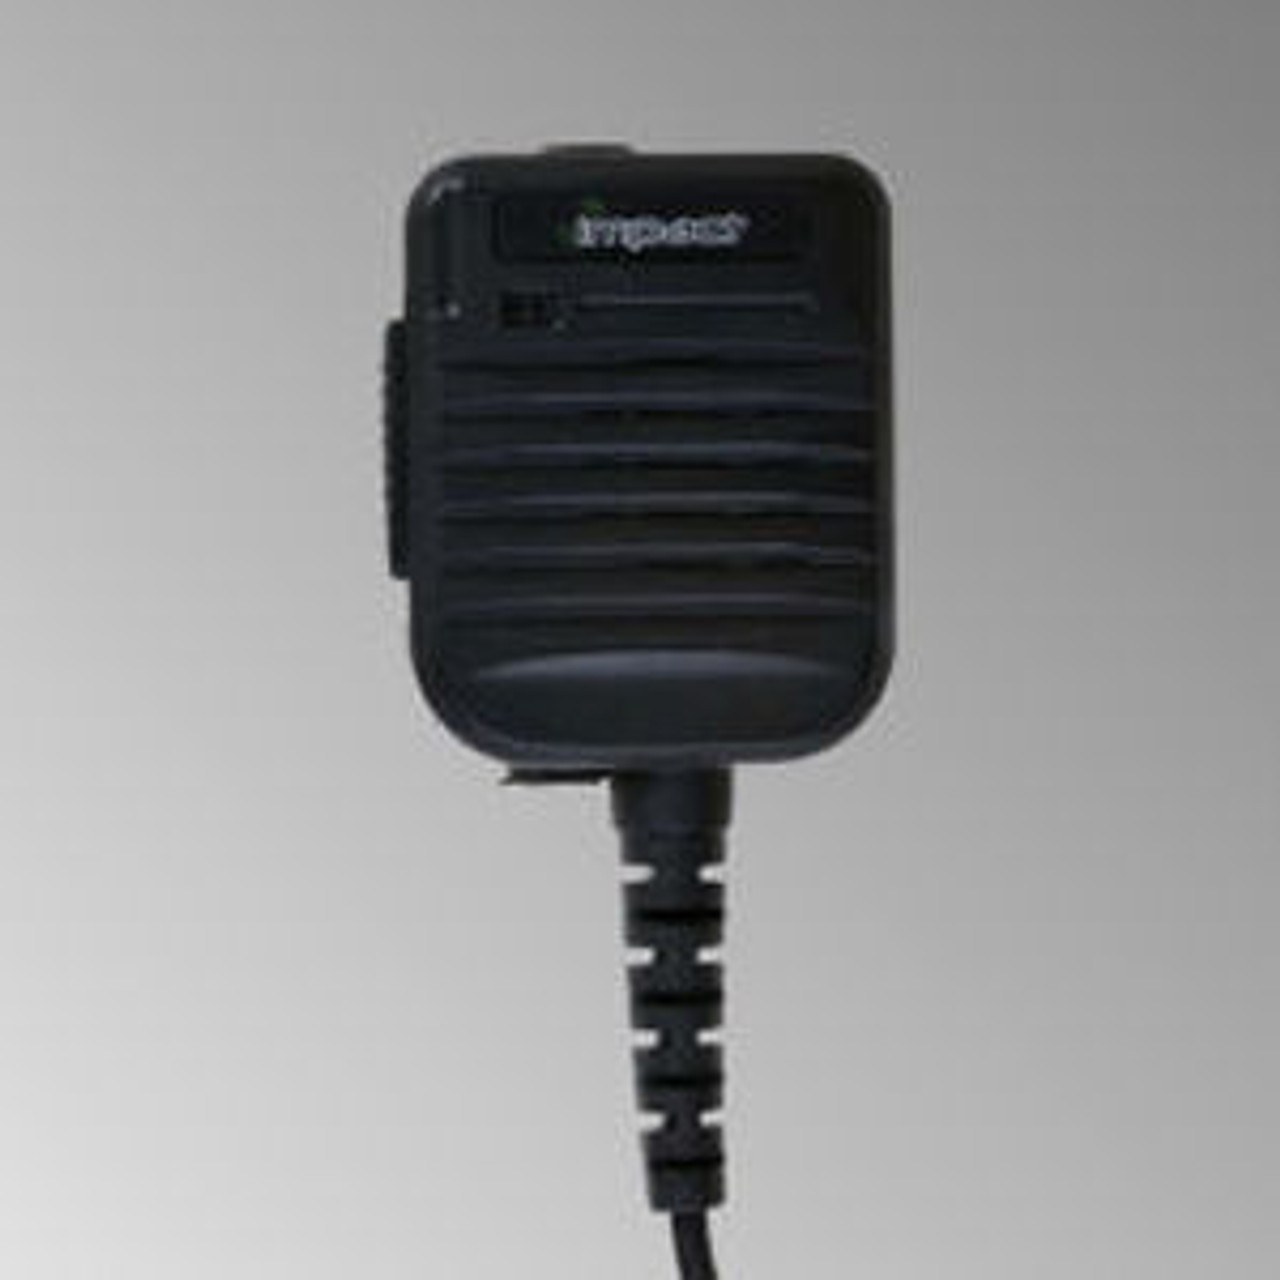 Harris P5300 Ruggedized IP67 Public Safety Speaker Mic.